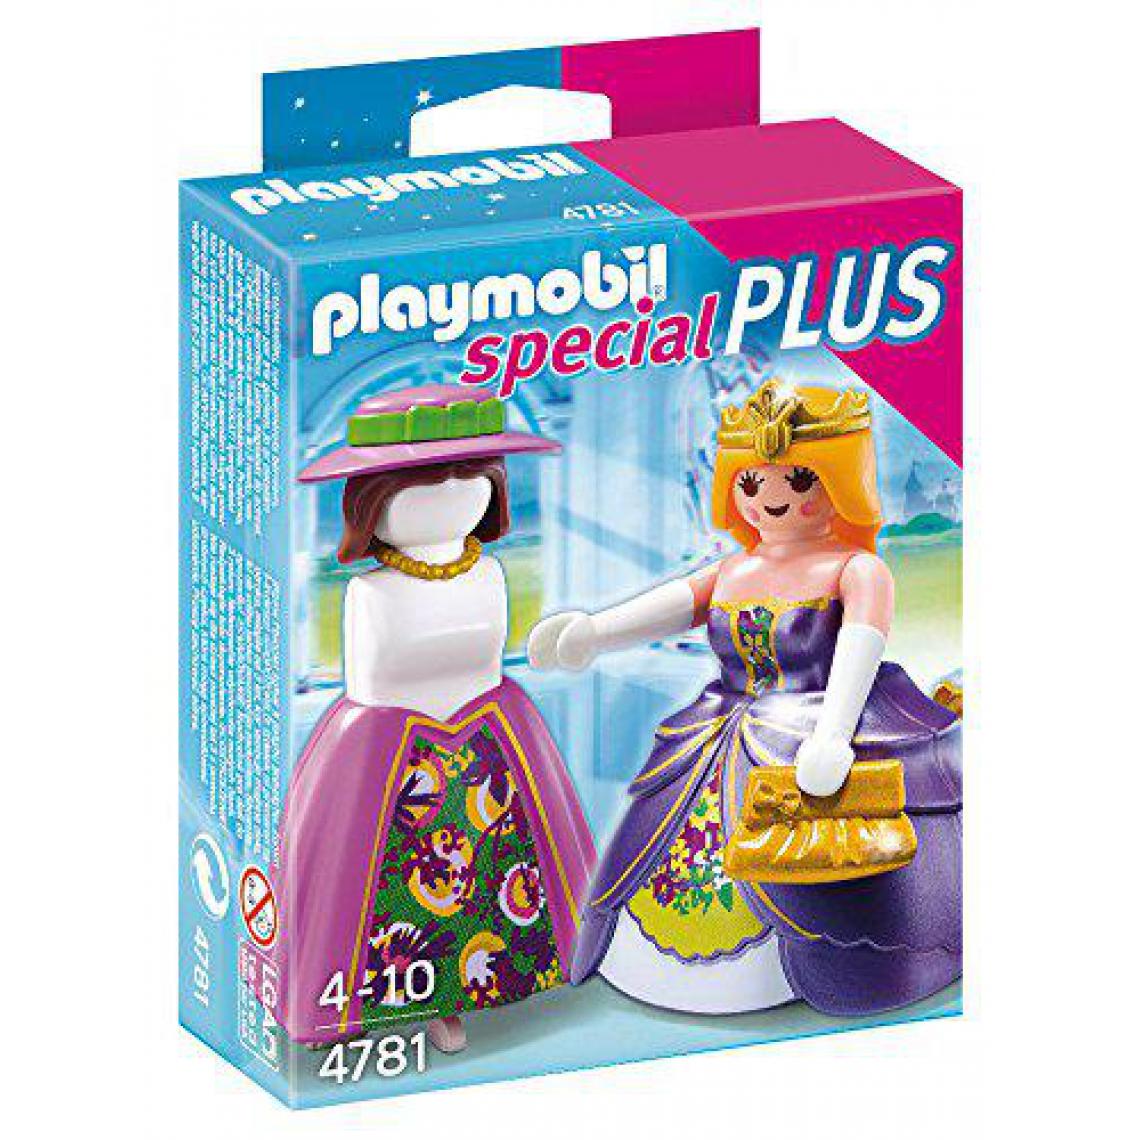 Playmobil - 4781 Playmobil Special+ Princesse avec mannequin 0115 - Playmobil